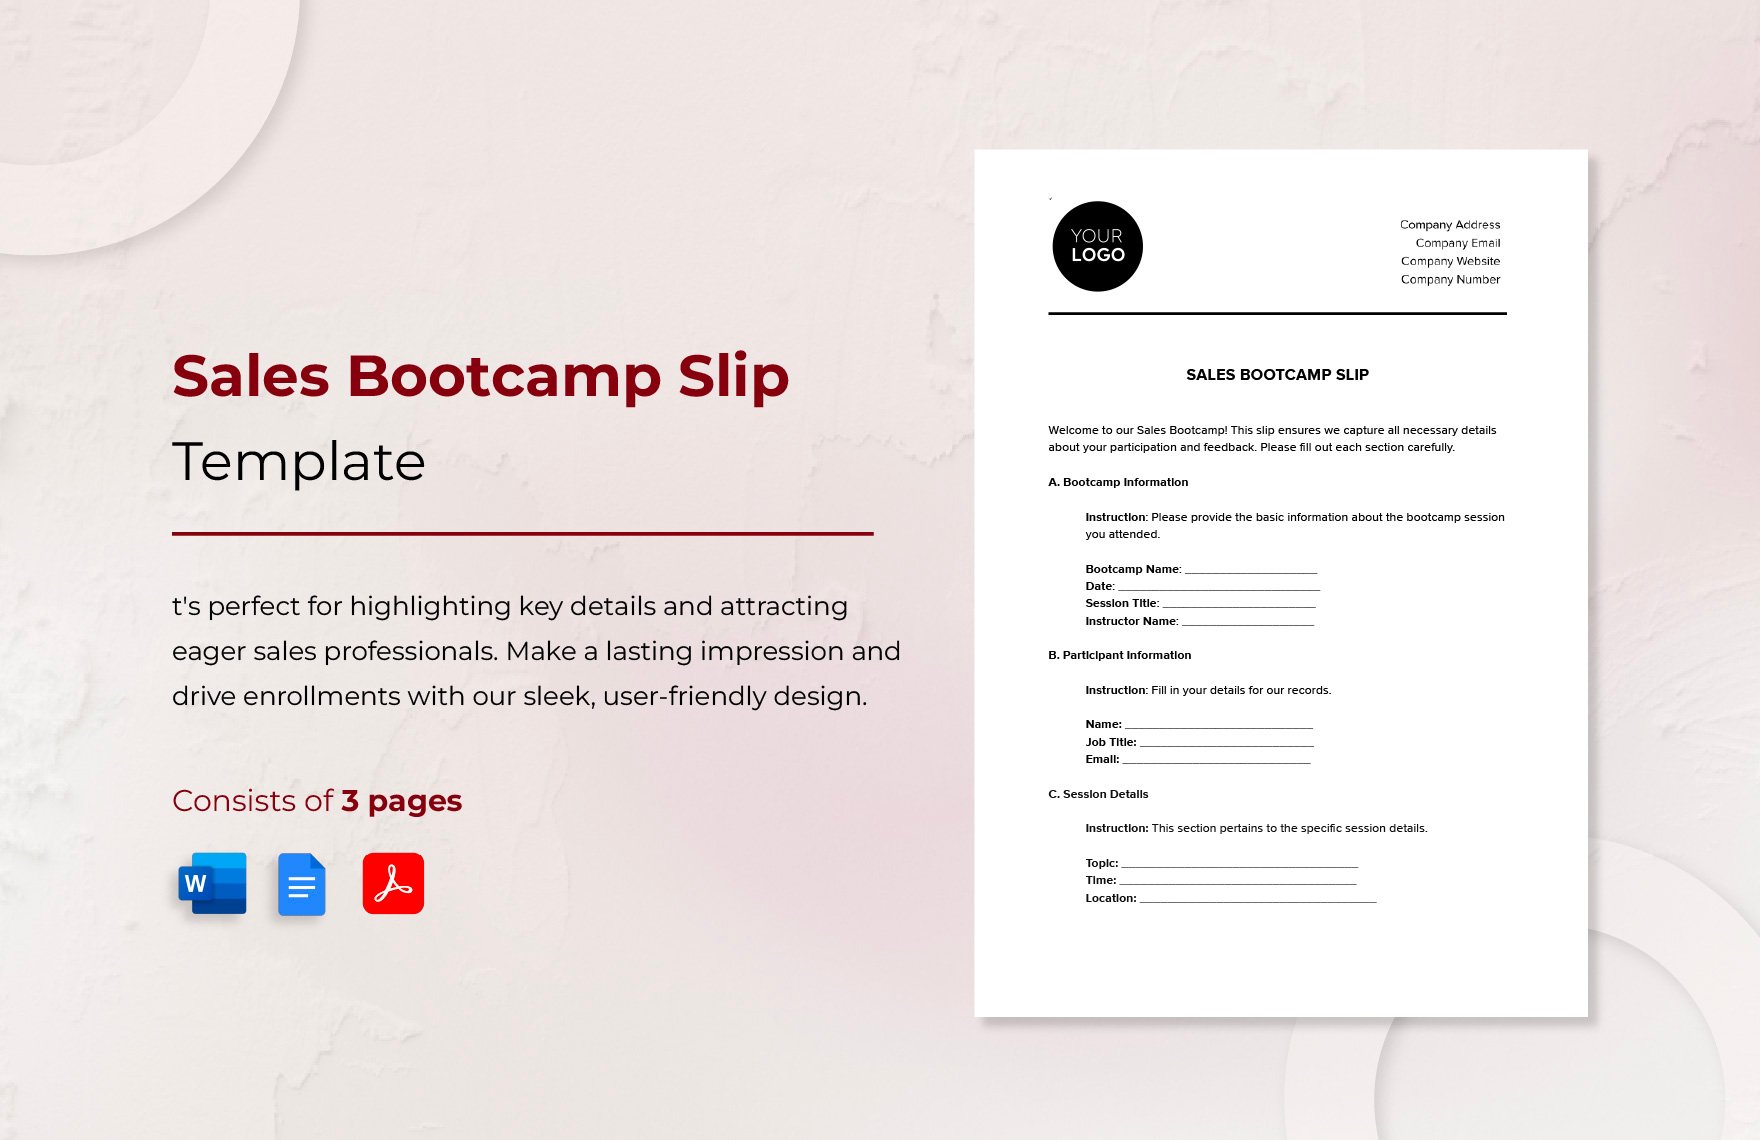 Sales Bootcamp Slip Template in Word, Google Docs, PDF